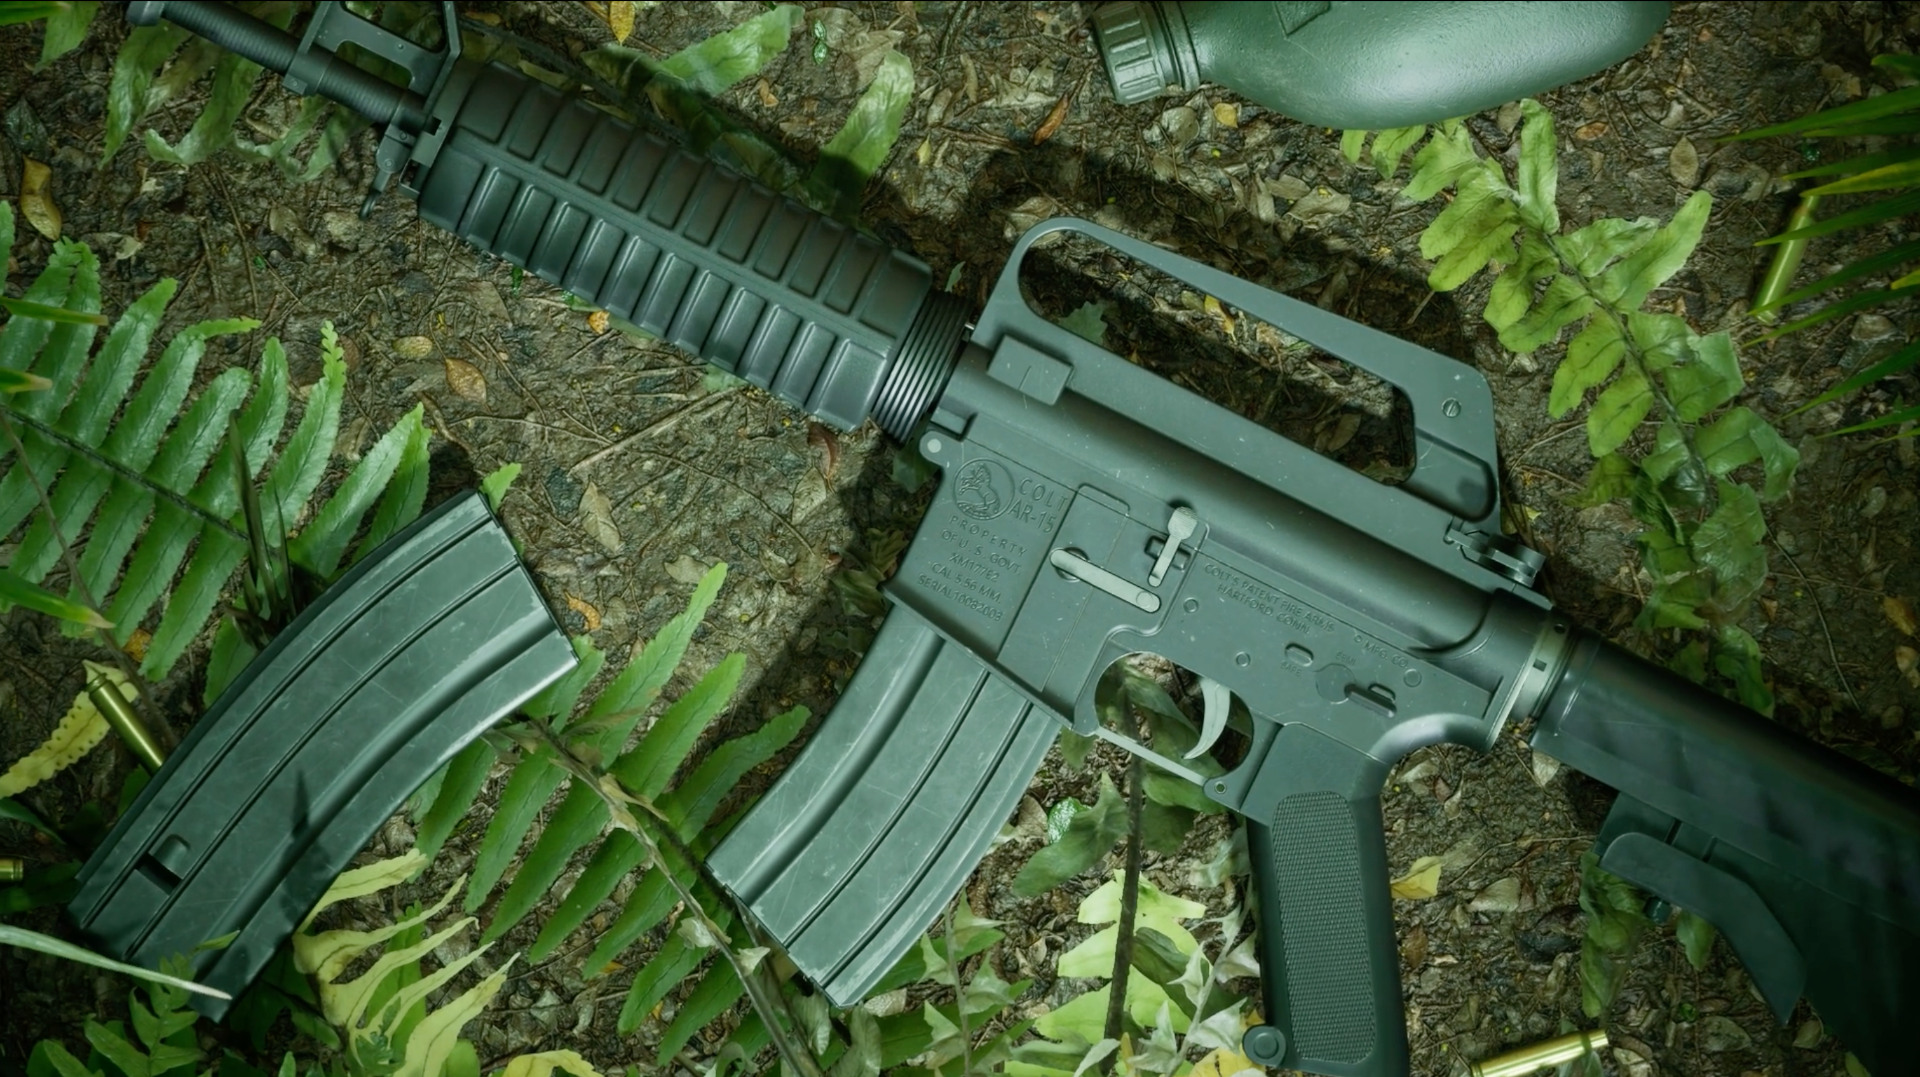 CGI machine rifle and ammo cartridge